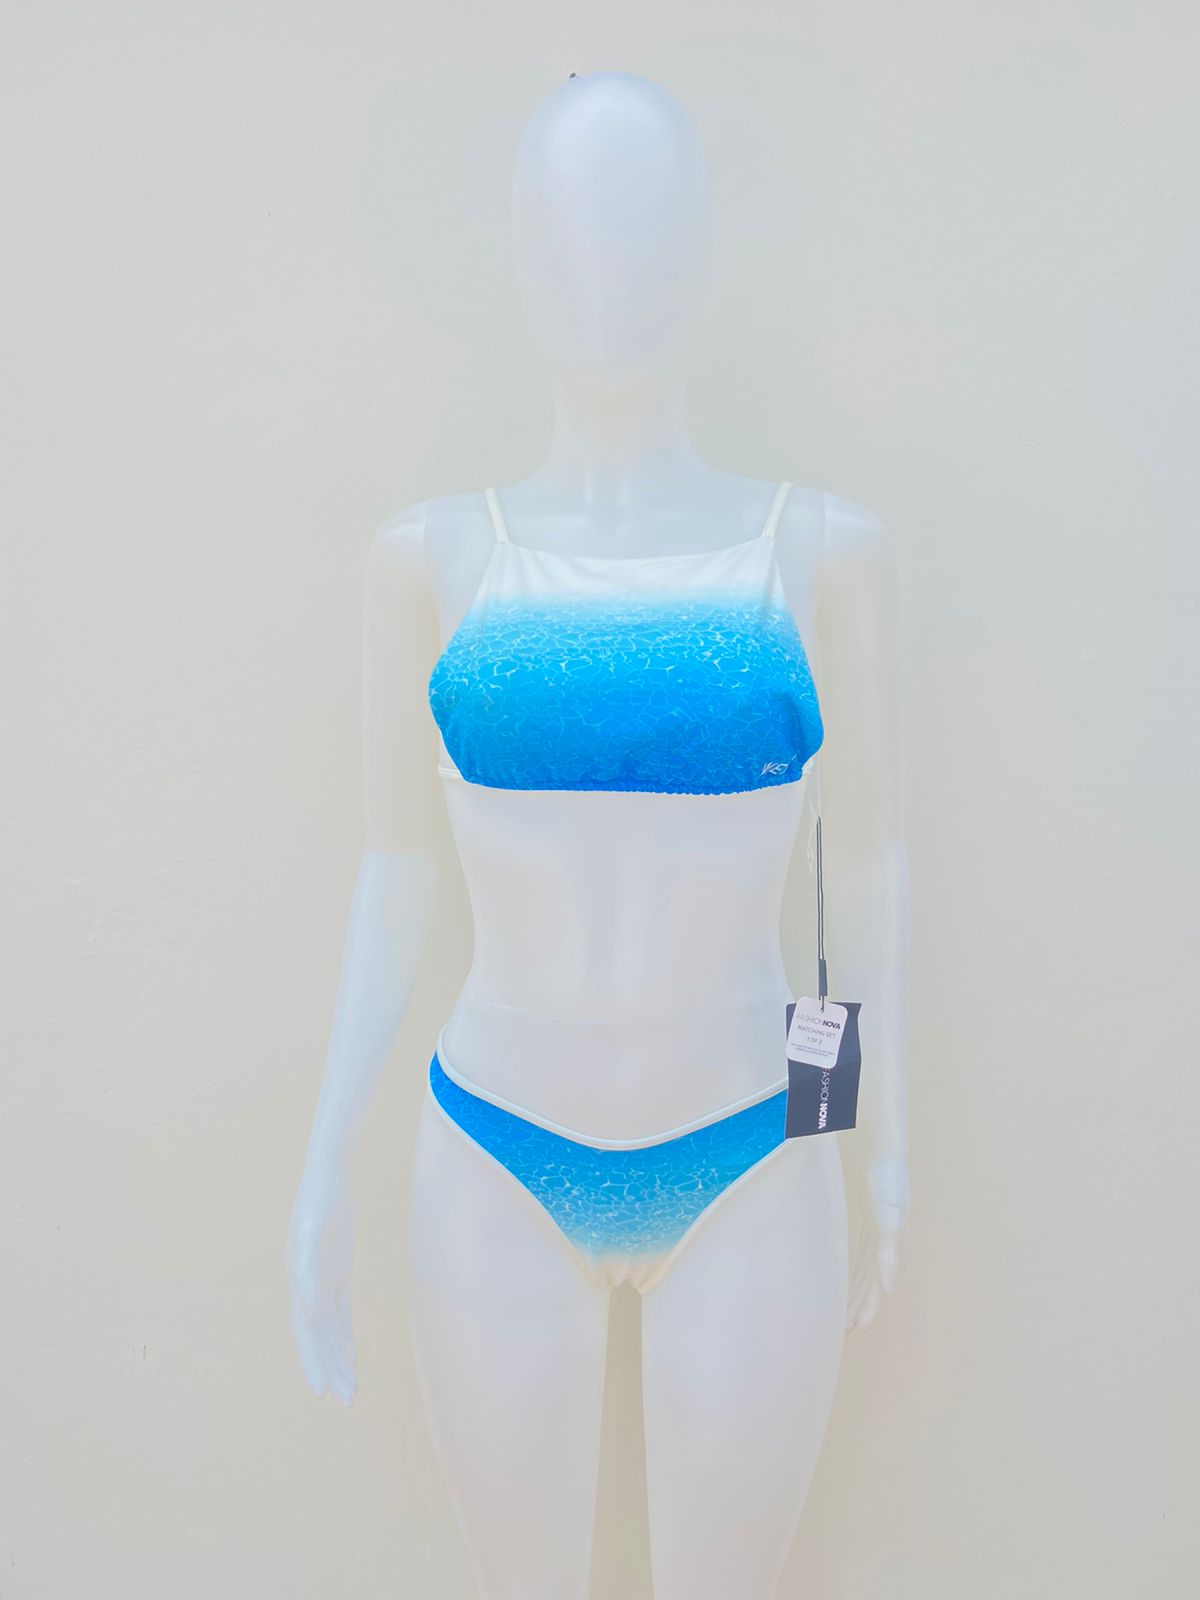 Biquini Fashion Nova original azul cielo con blanco estilo degradado de piscina CLEAR WATERS